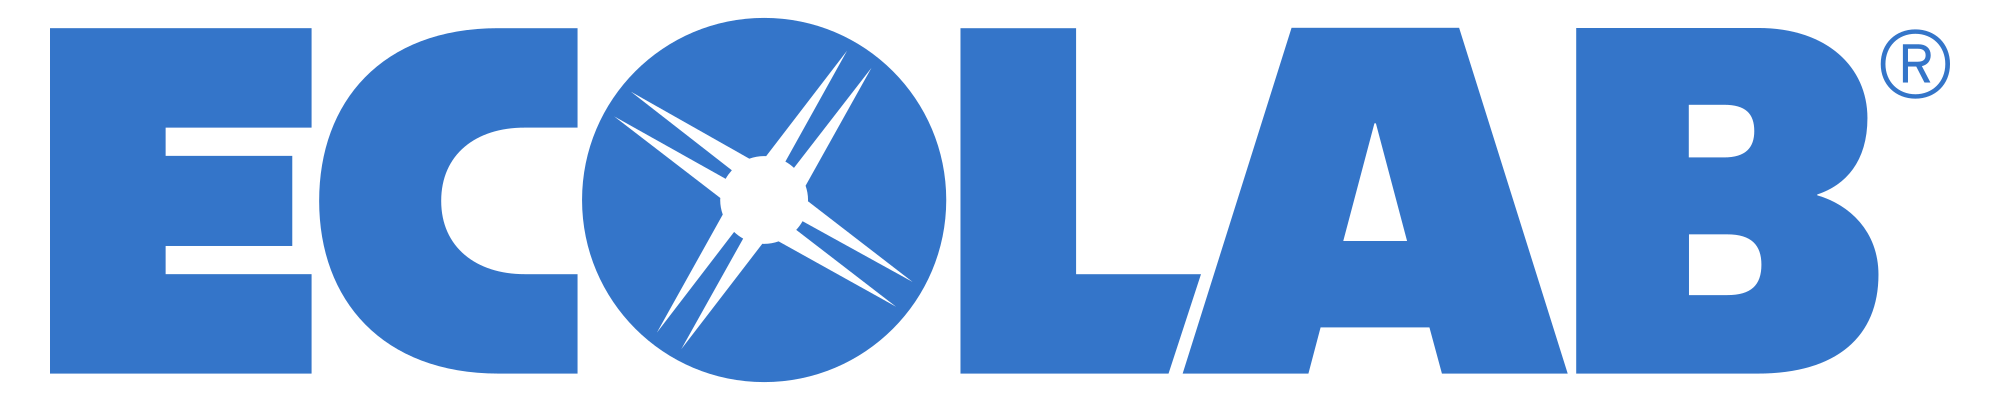 2000px-Ecolab_Logo.svg